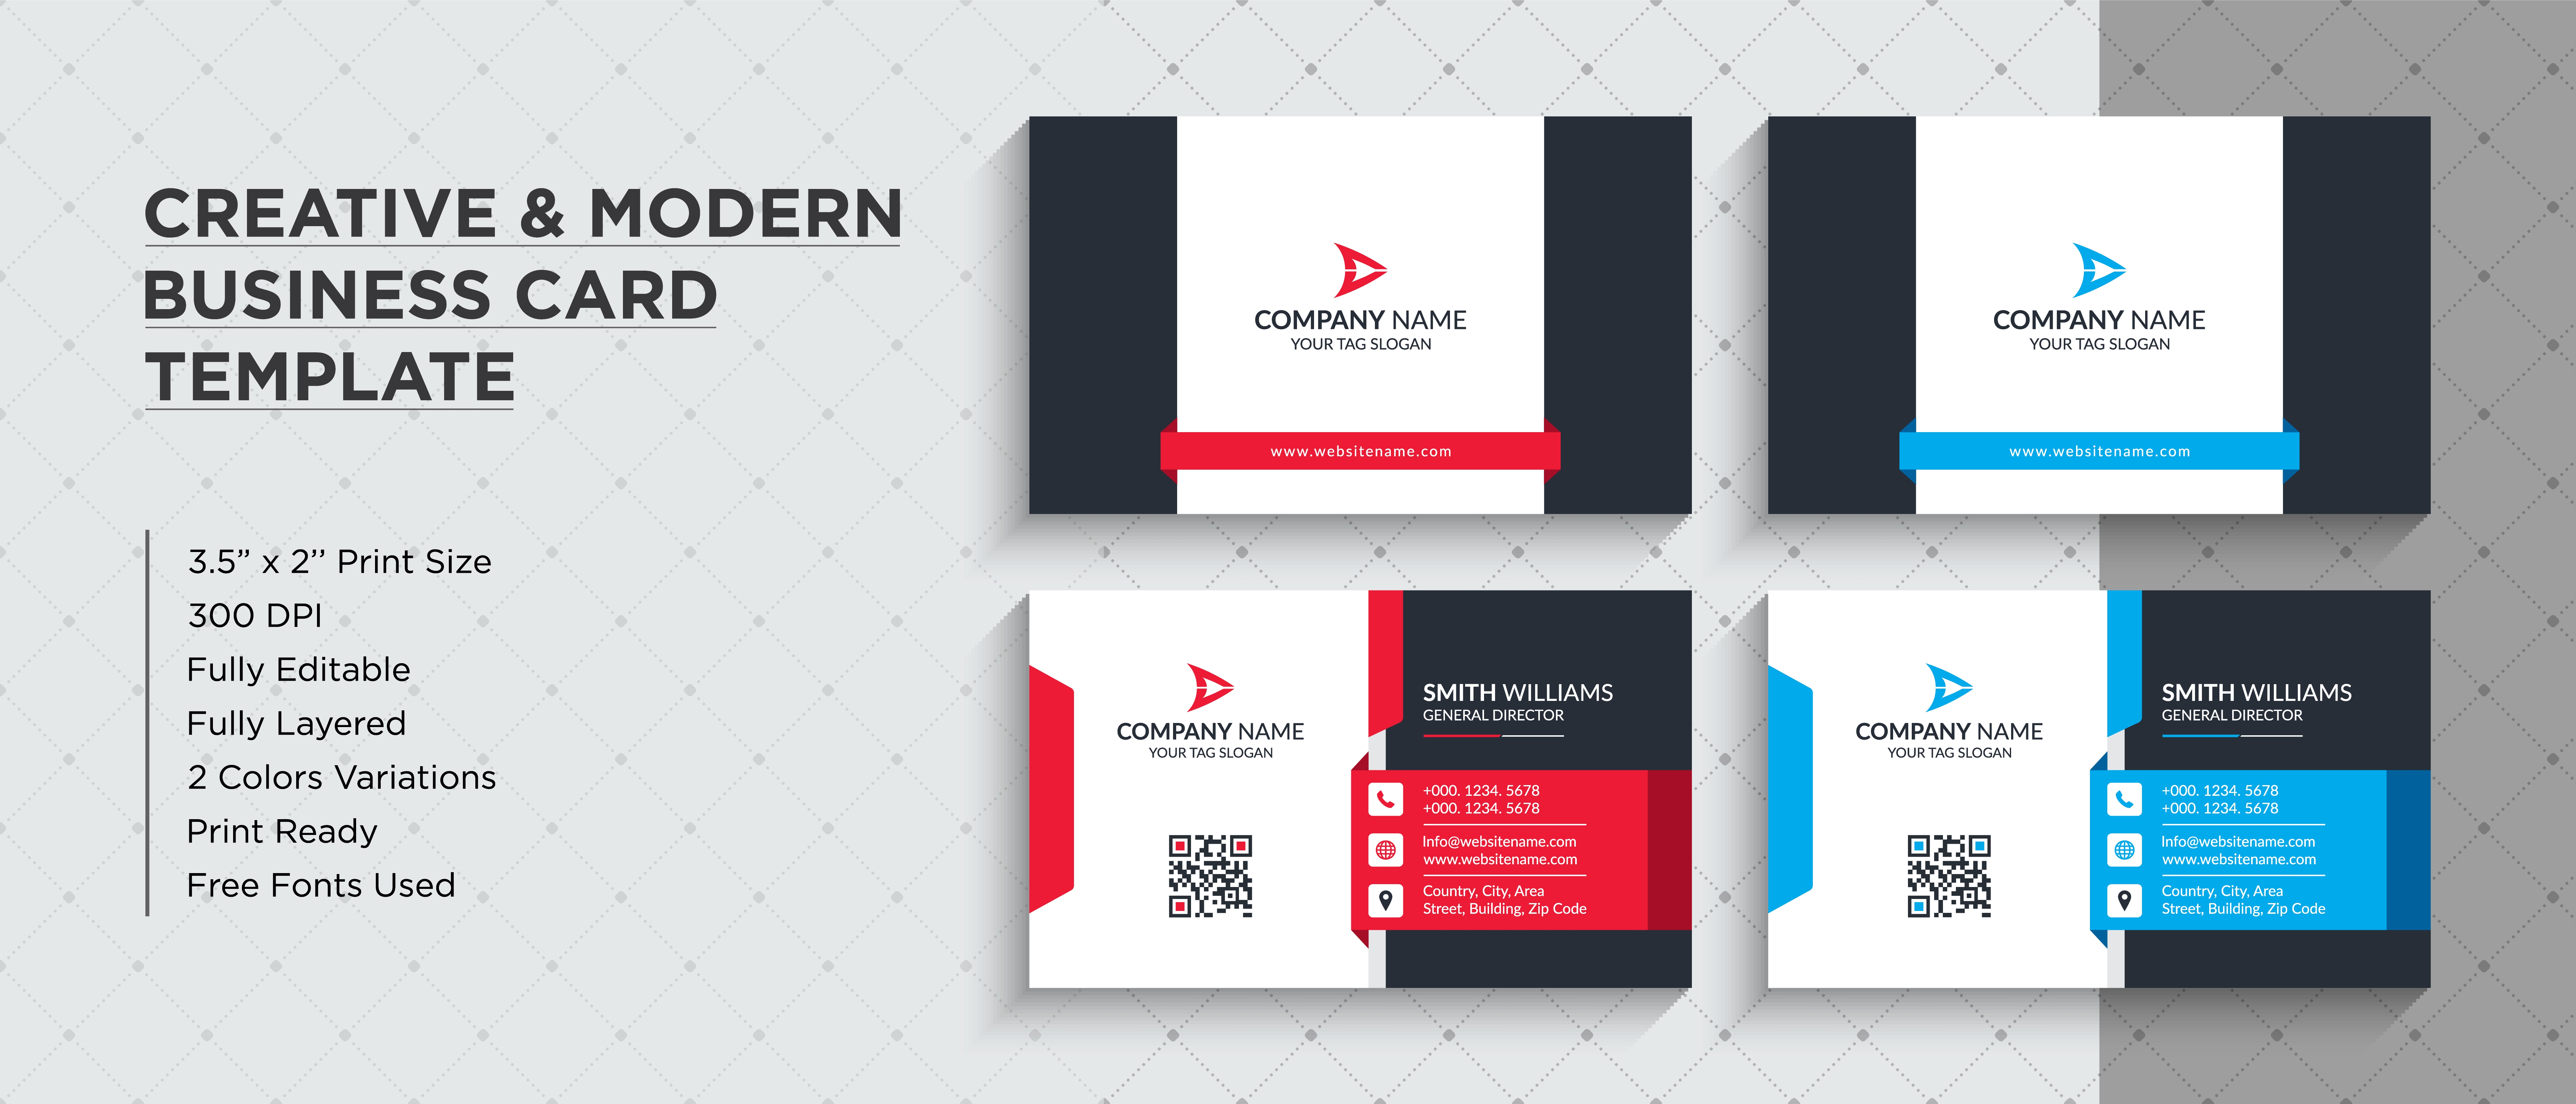 Creative and modern business card set